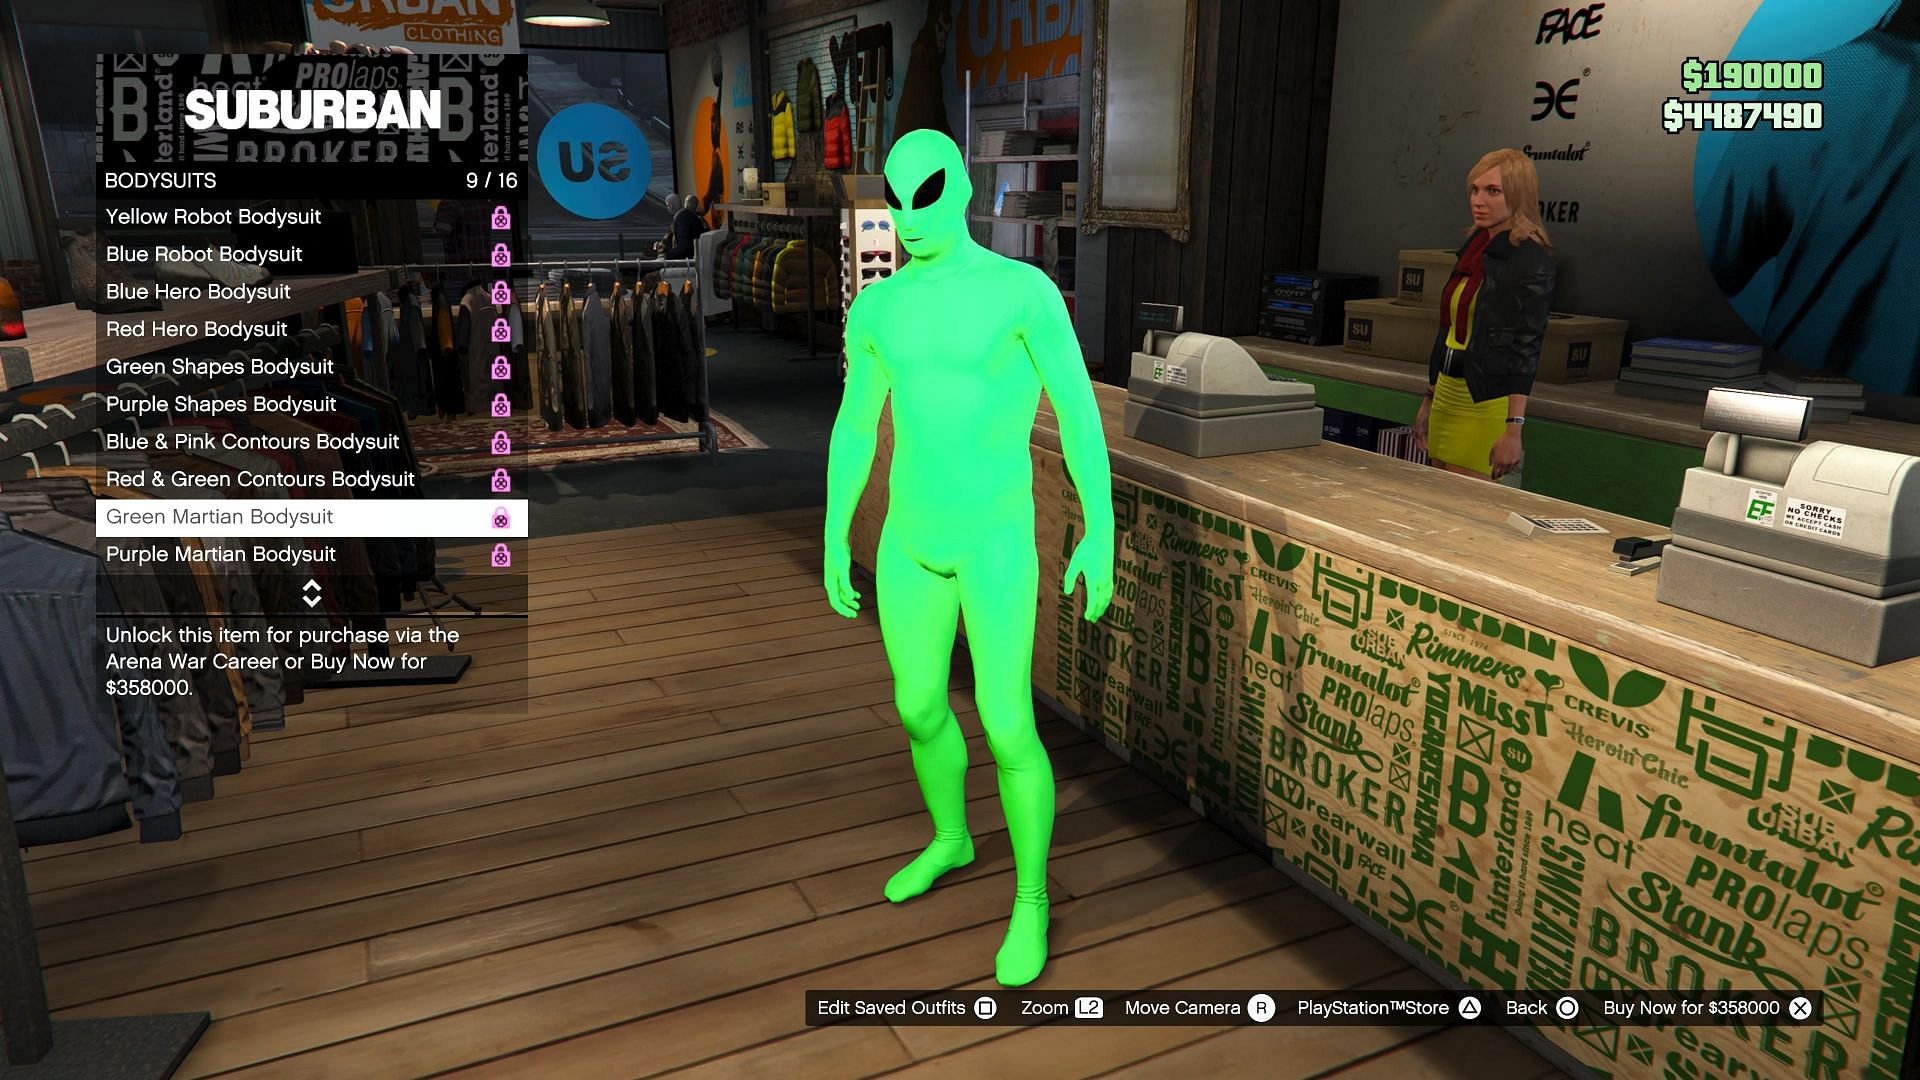 The green alien suit is called the Green Martian Bodysuit (Image via Rockstar Games)